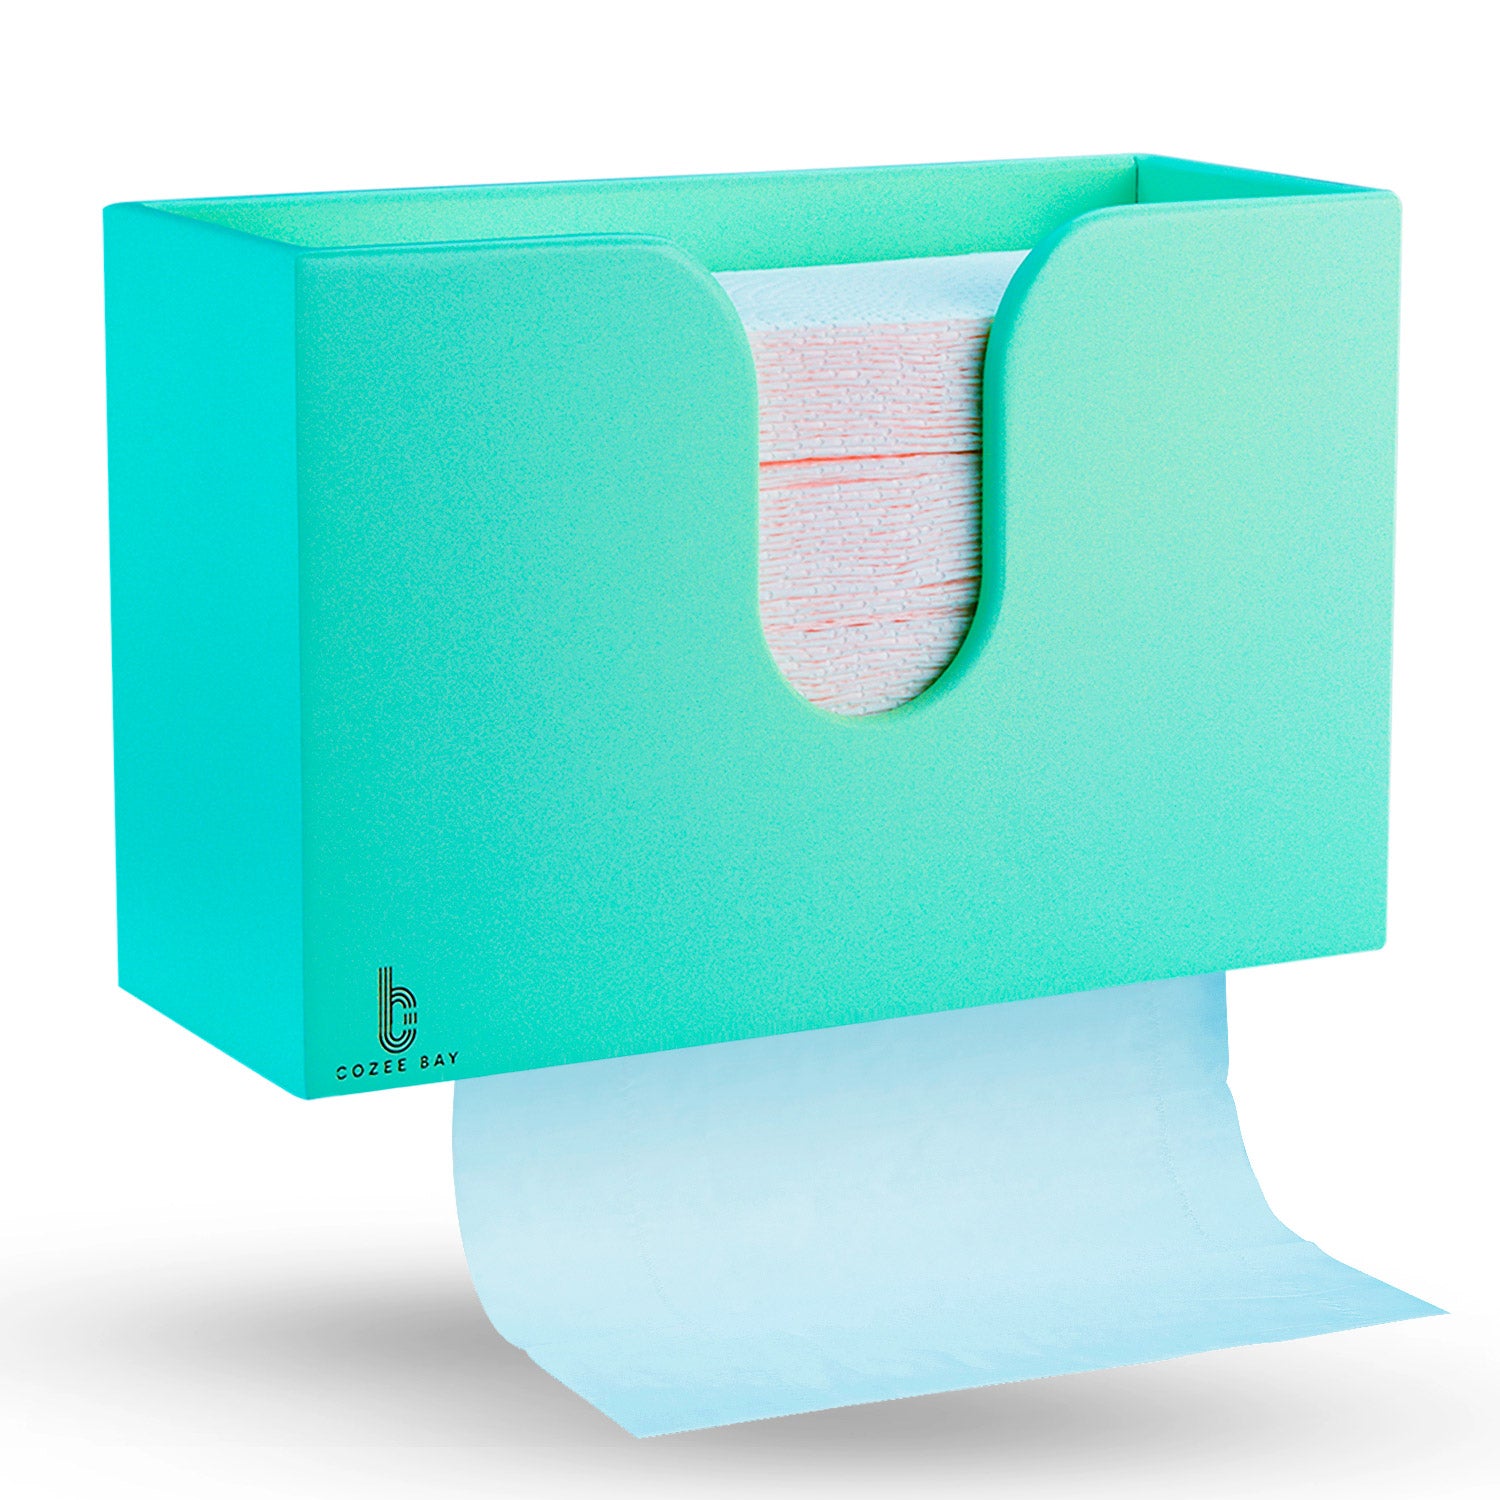 https://cdn.shopify.com/s/files/1/0378/4530/3435/products/cozee-bay-paper-towel-dispenser-light-blue-green_1600x.jpg?v=1627102947